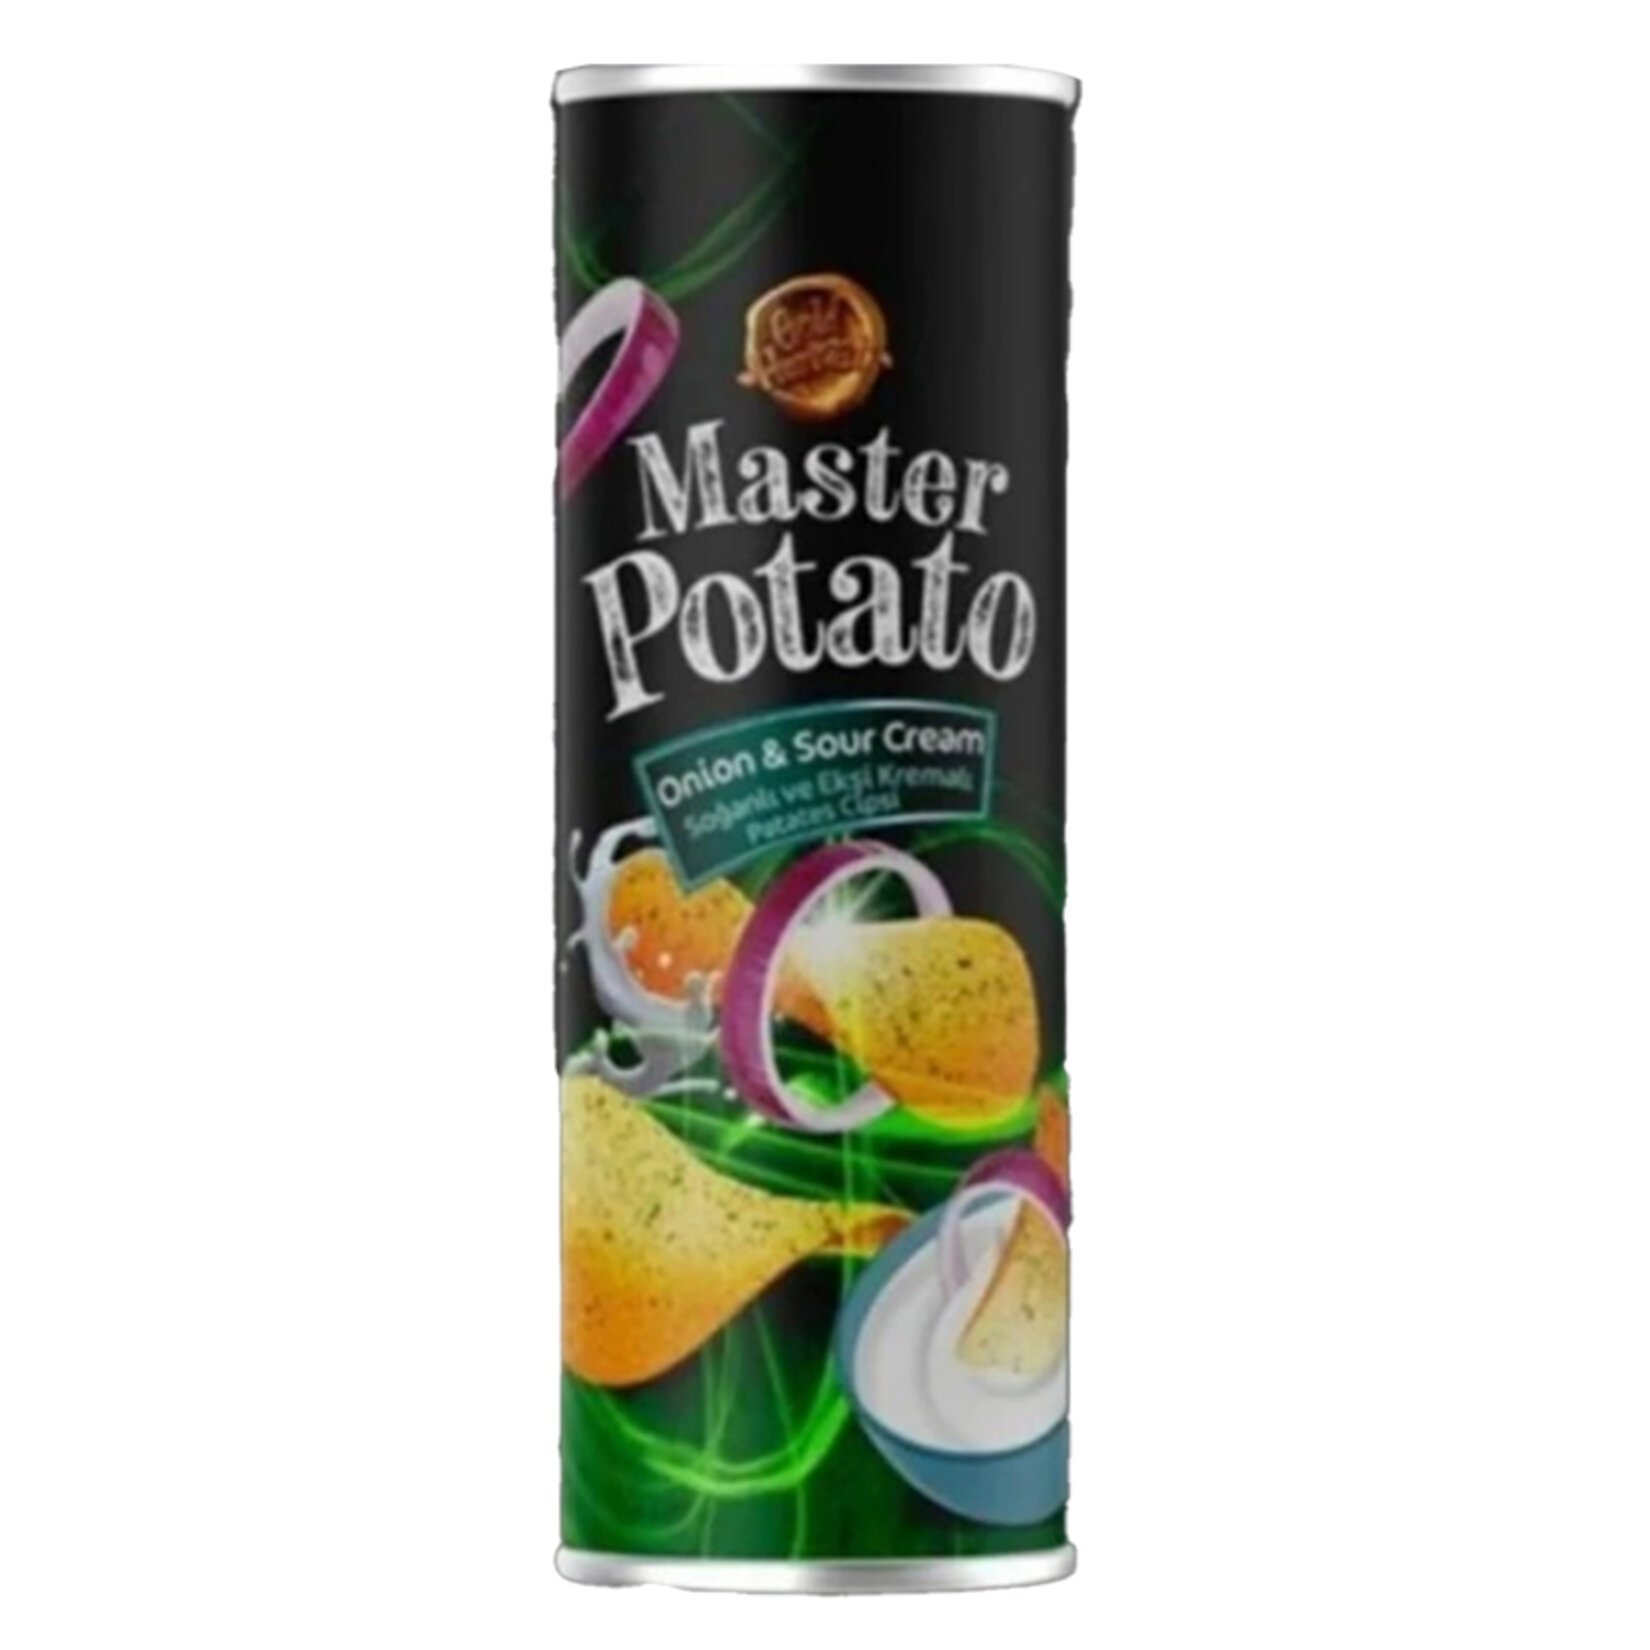 Master Potato Sour Cream&Onion